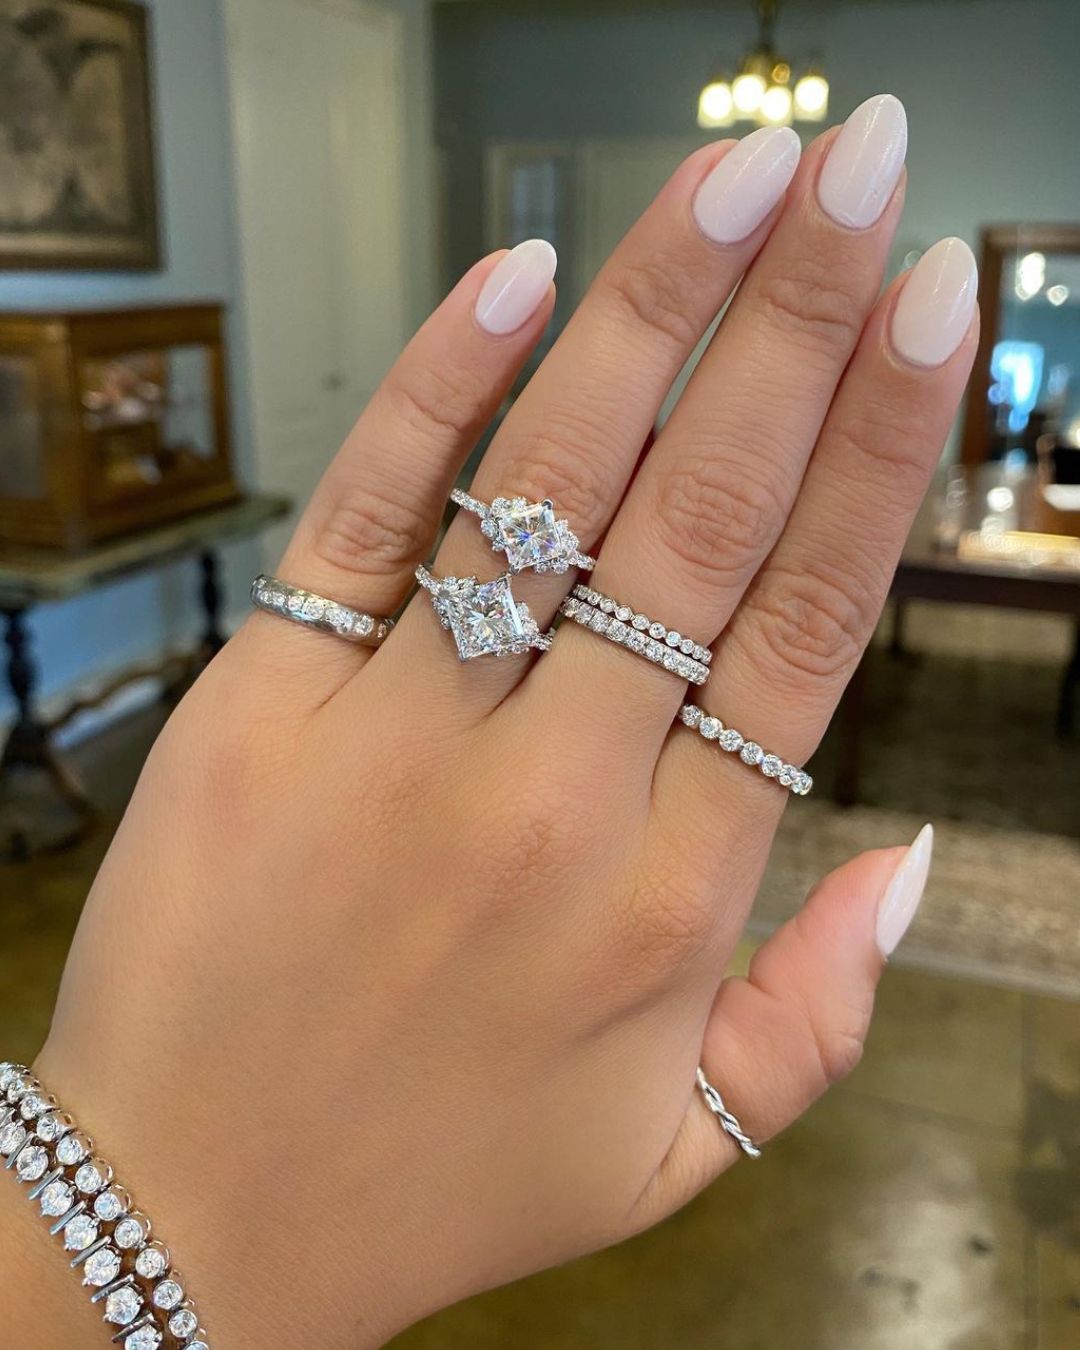 princess cut engagement rings diamond ring in set1